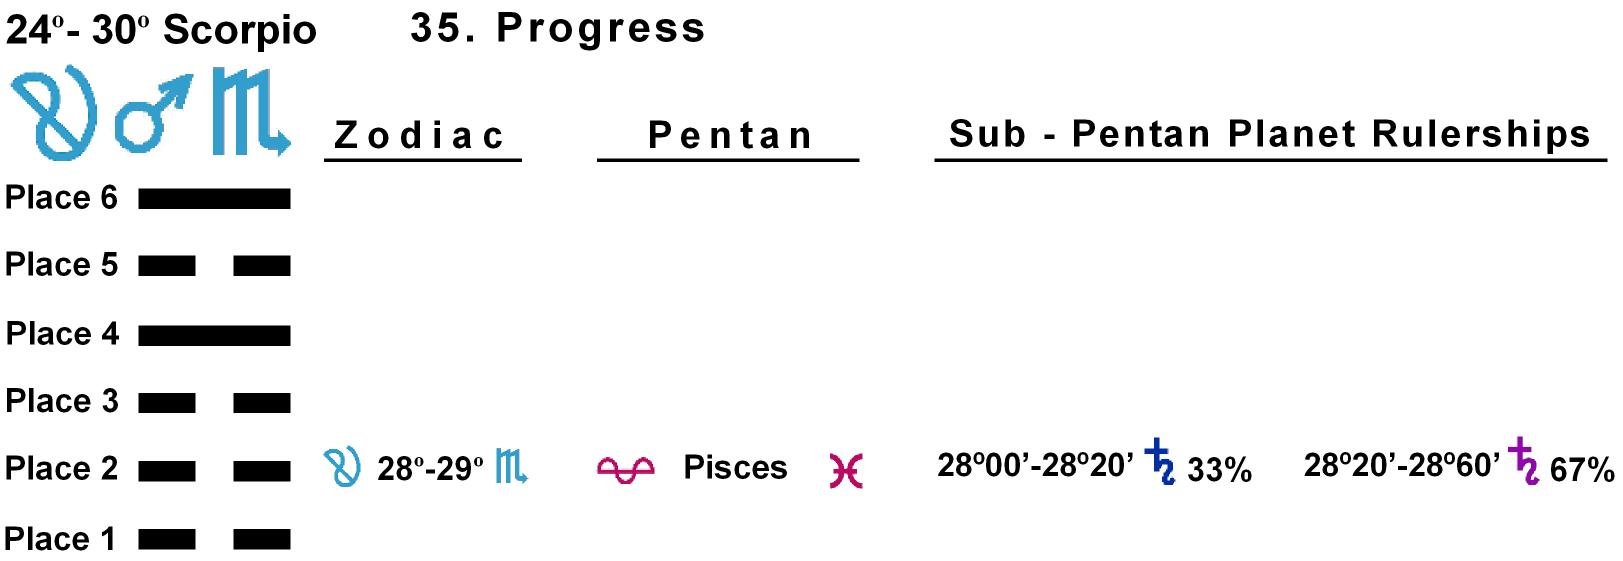 Pent-lines-08SC 28-29 Hx-35 Progress